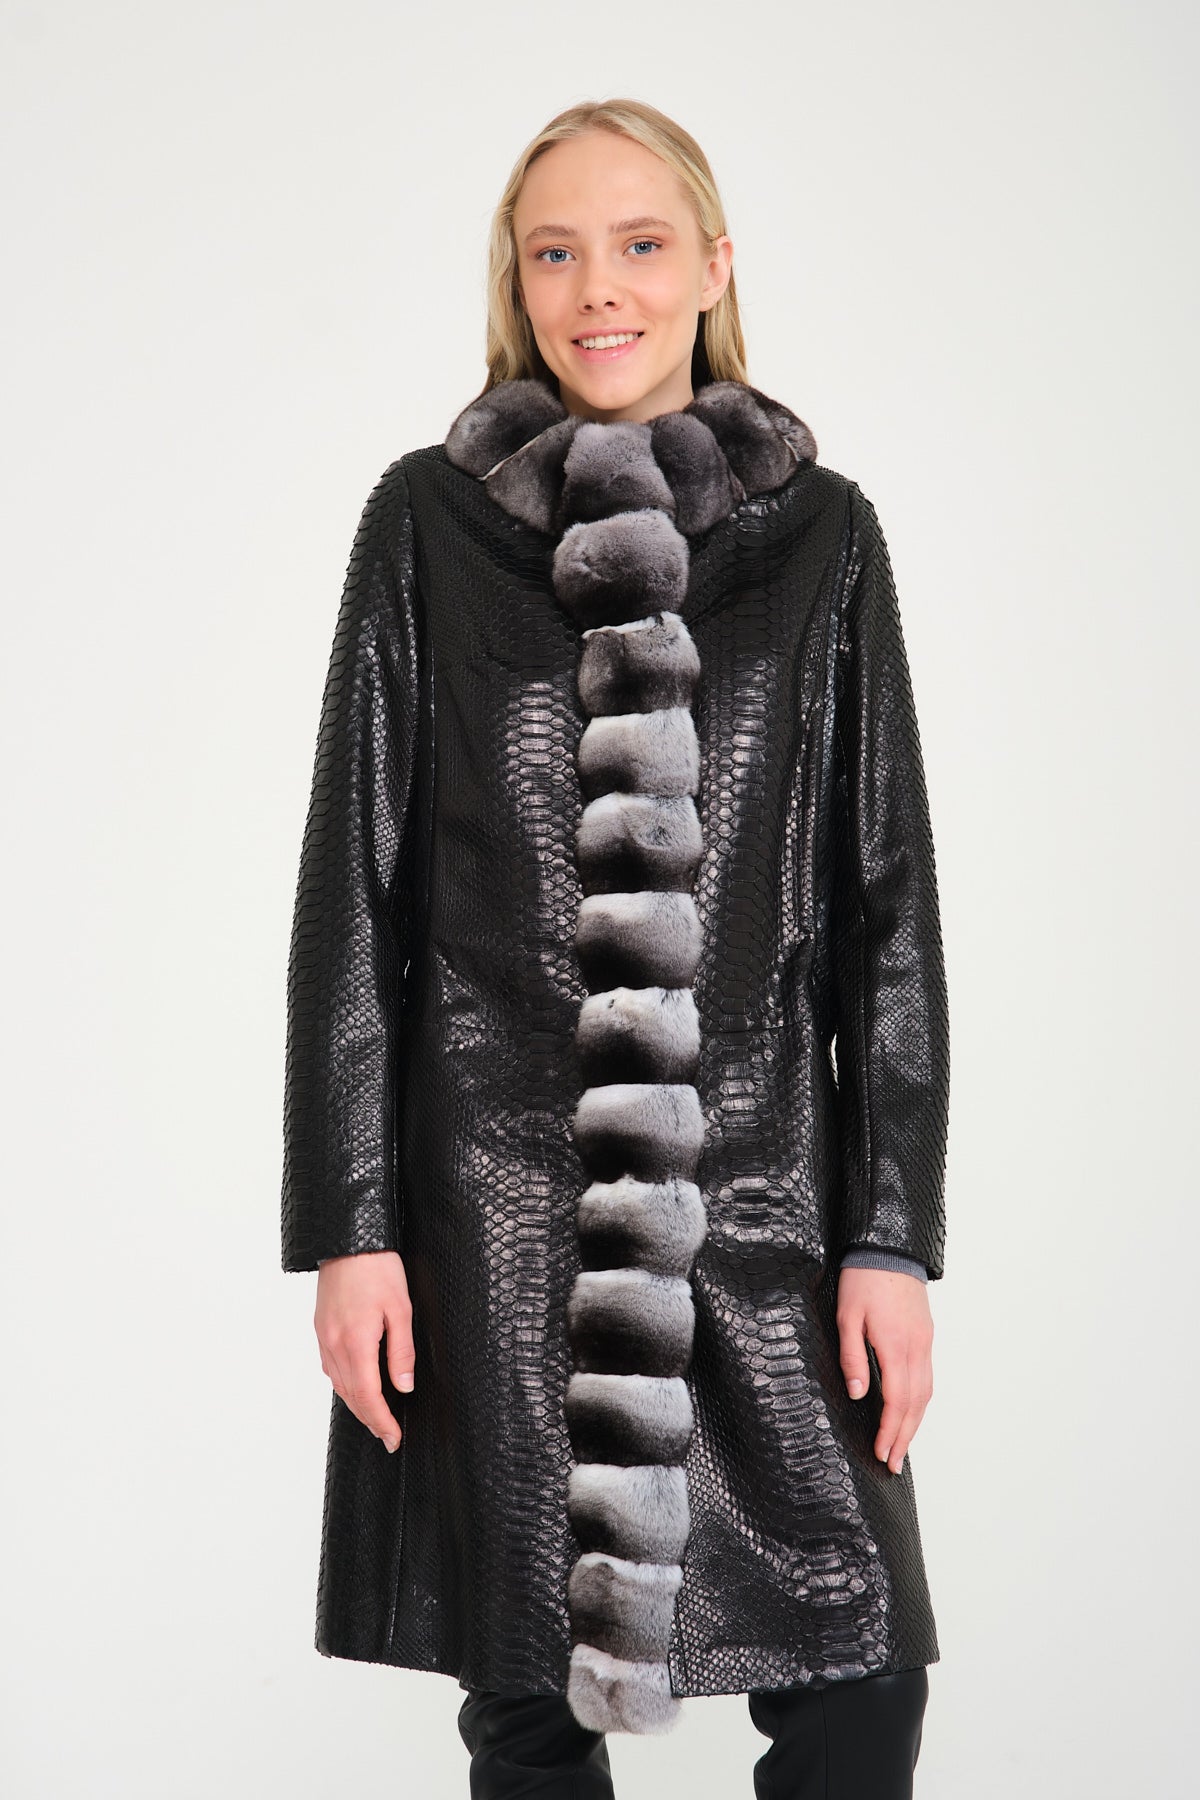 Black Python Leather / Chinchilla Coat